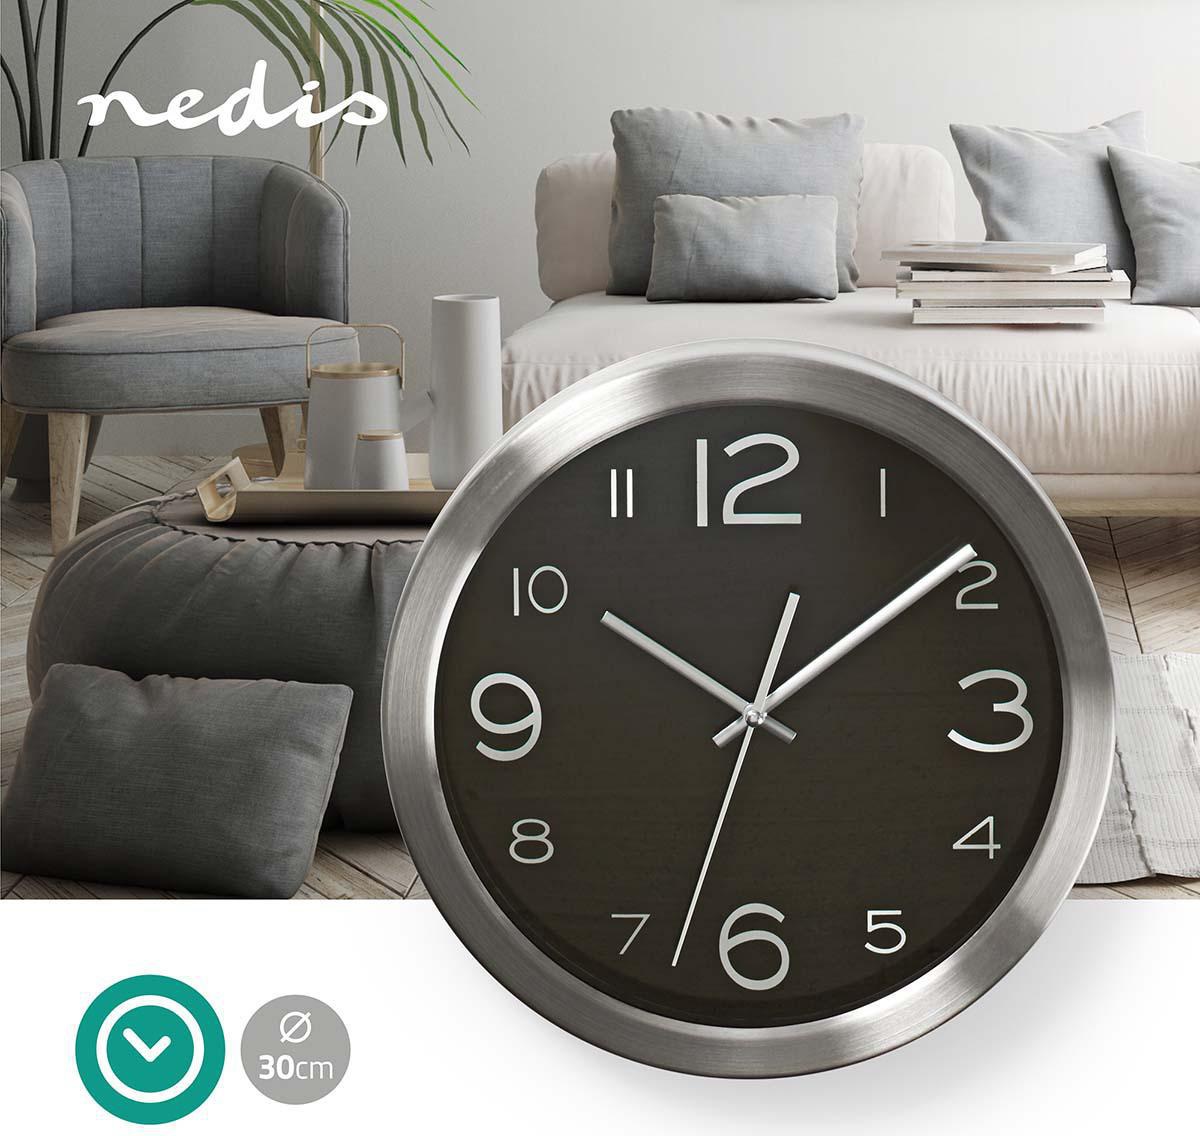 Circular wall clock, stainless steel, 300mm, guartz, CLWA010MT30BK, NEDIS